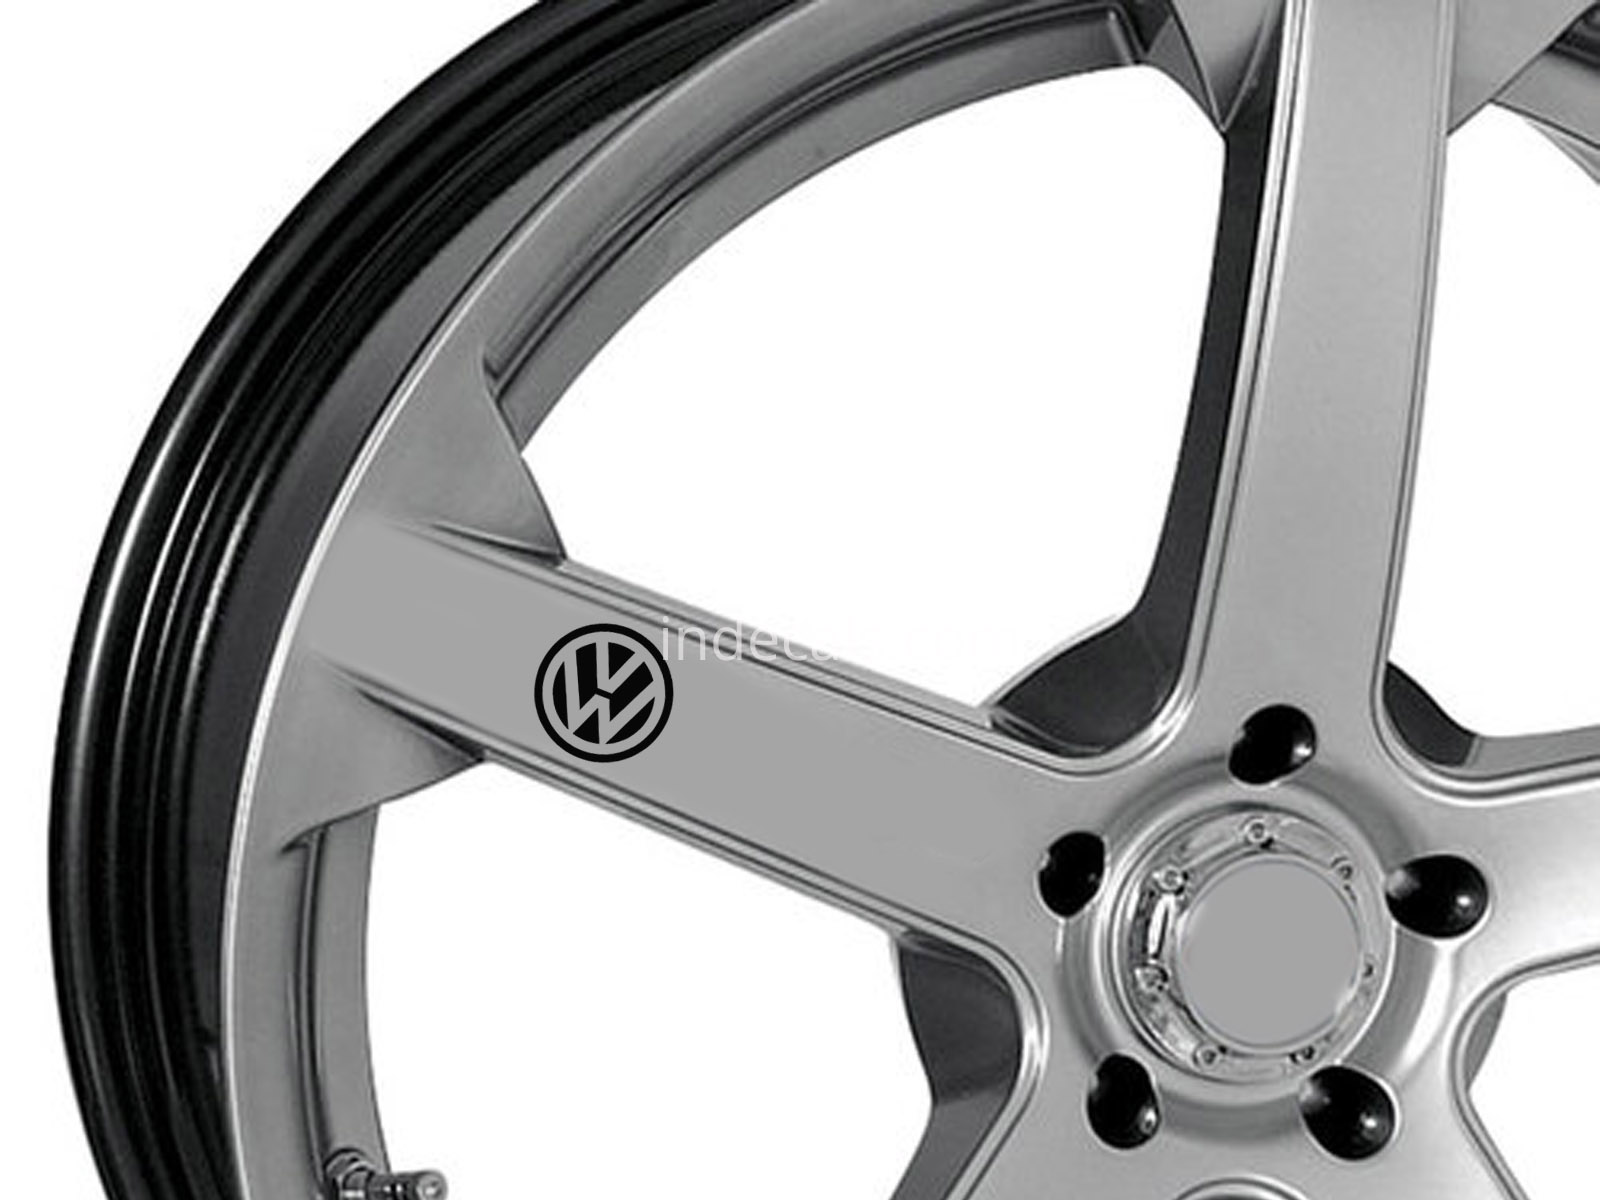 6 x Volkswagen Stickers for Wheels - Black